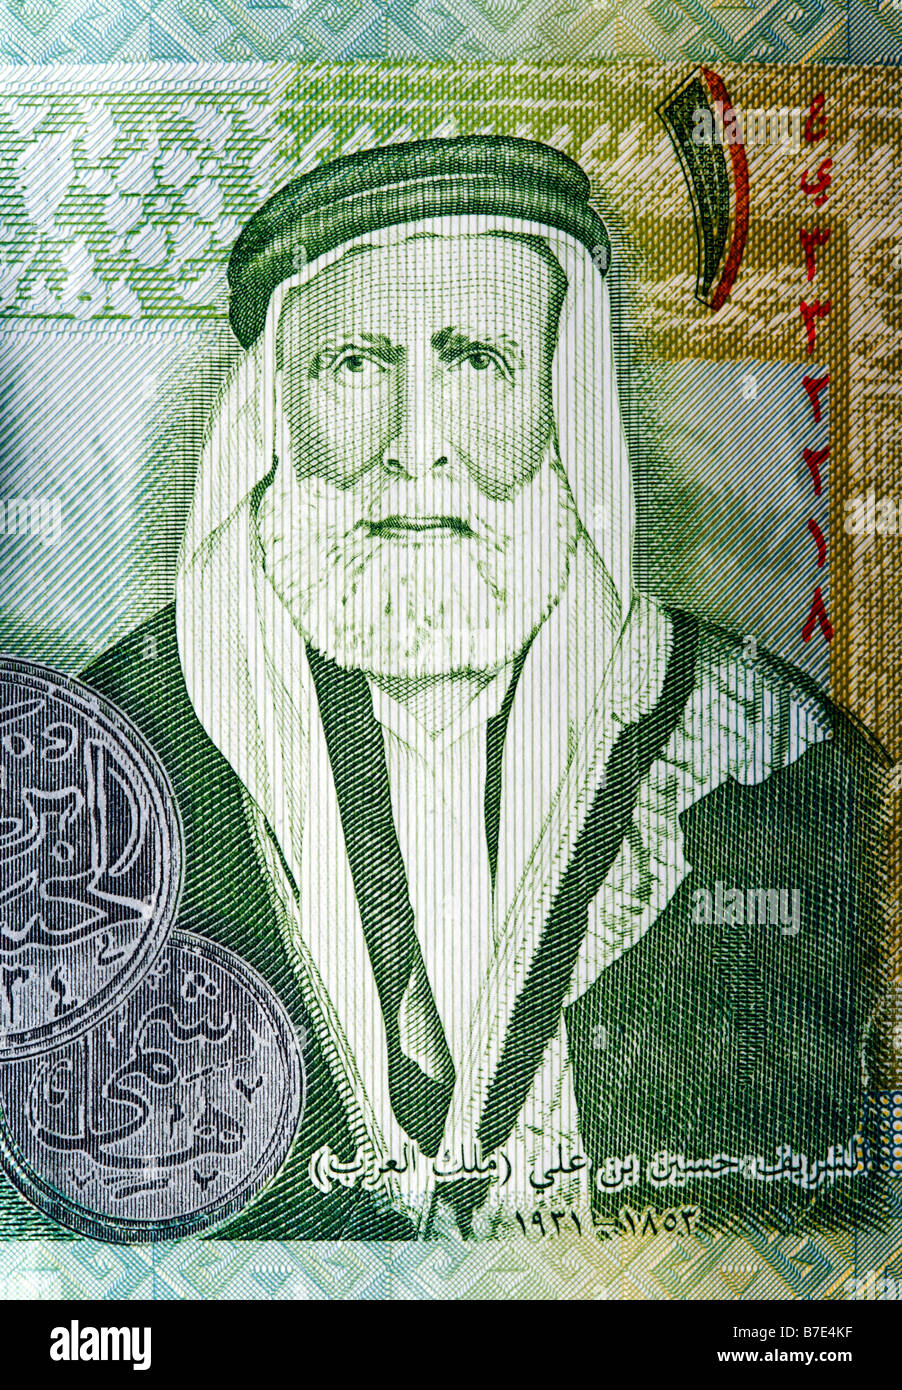 His Majesty Sharif Hussein Bin Ali, king of Hejas (1879-1935), portrait on Jordanian dinar banknote Stock Photo